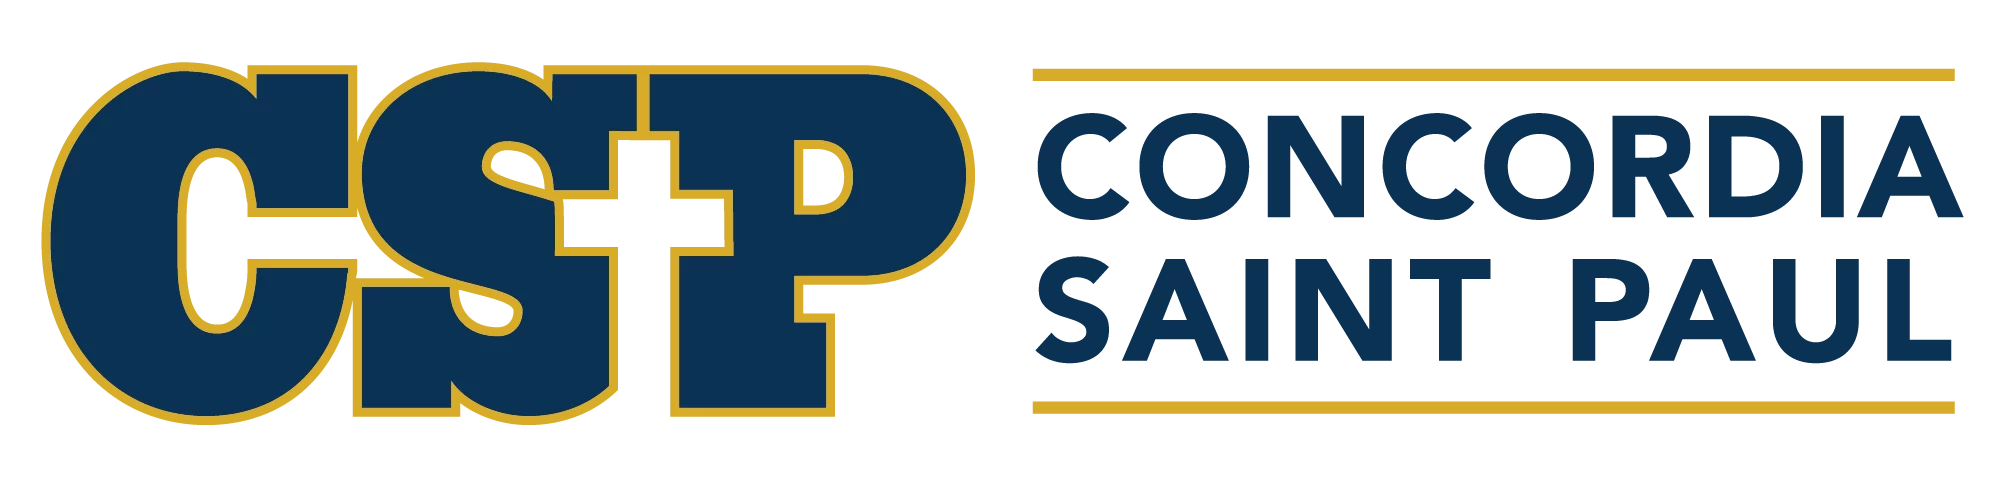 Concordia University, St. Paul logo